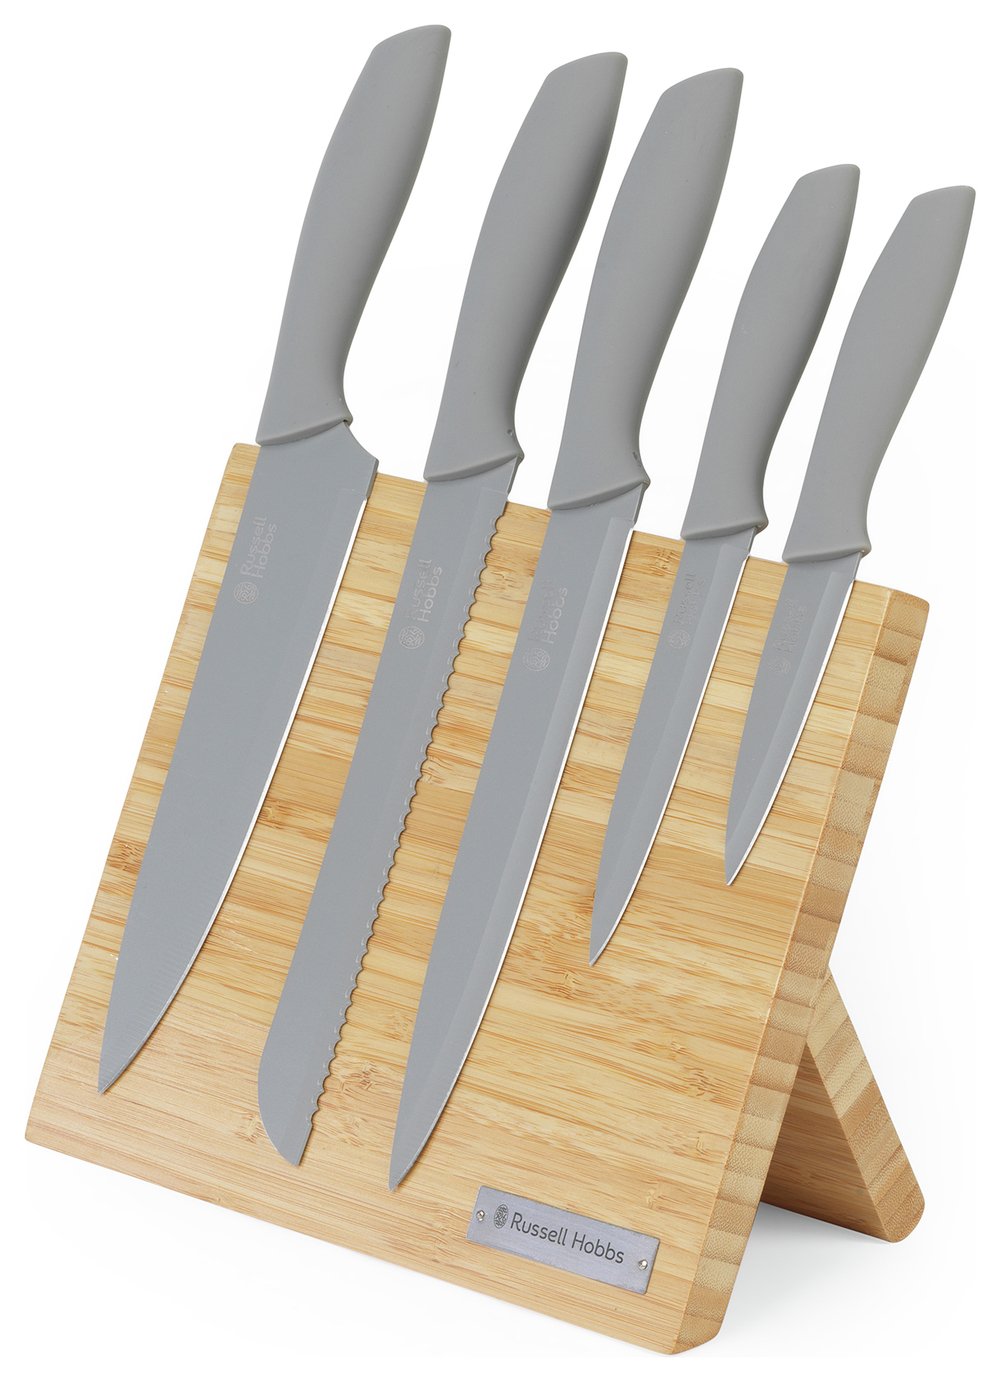 Russell Hobbs 5 Piece Knife Block Set - Grey